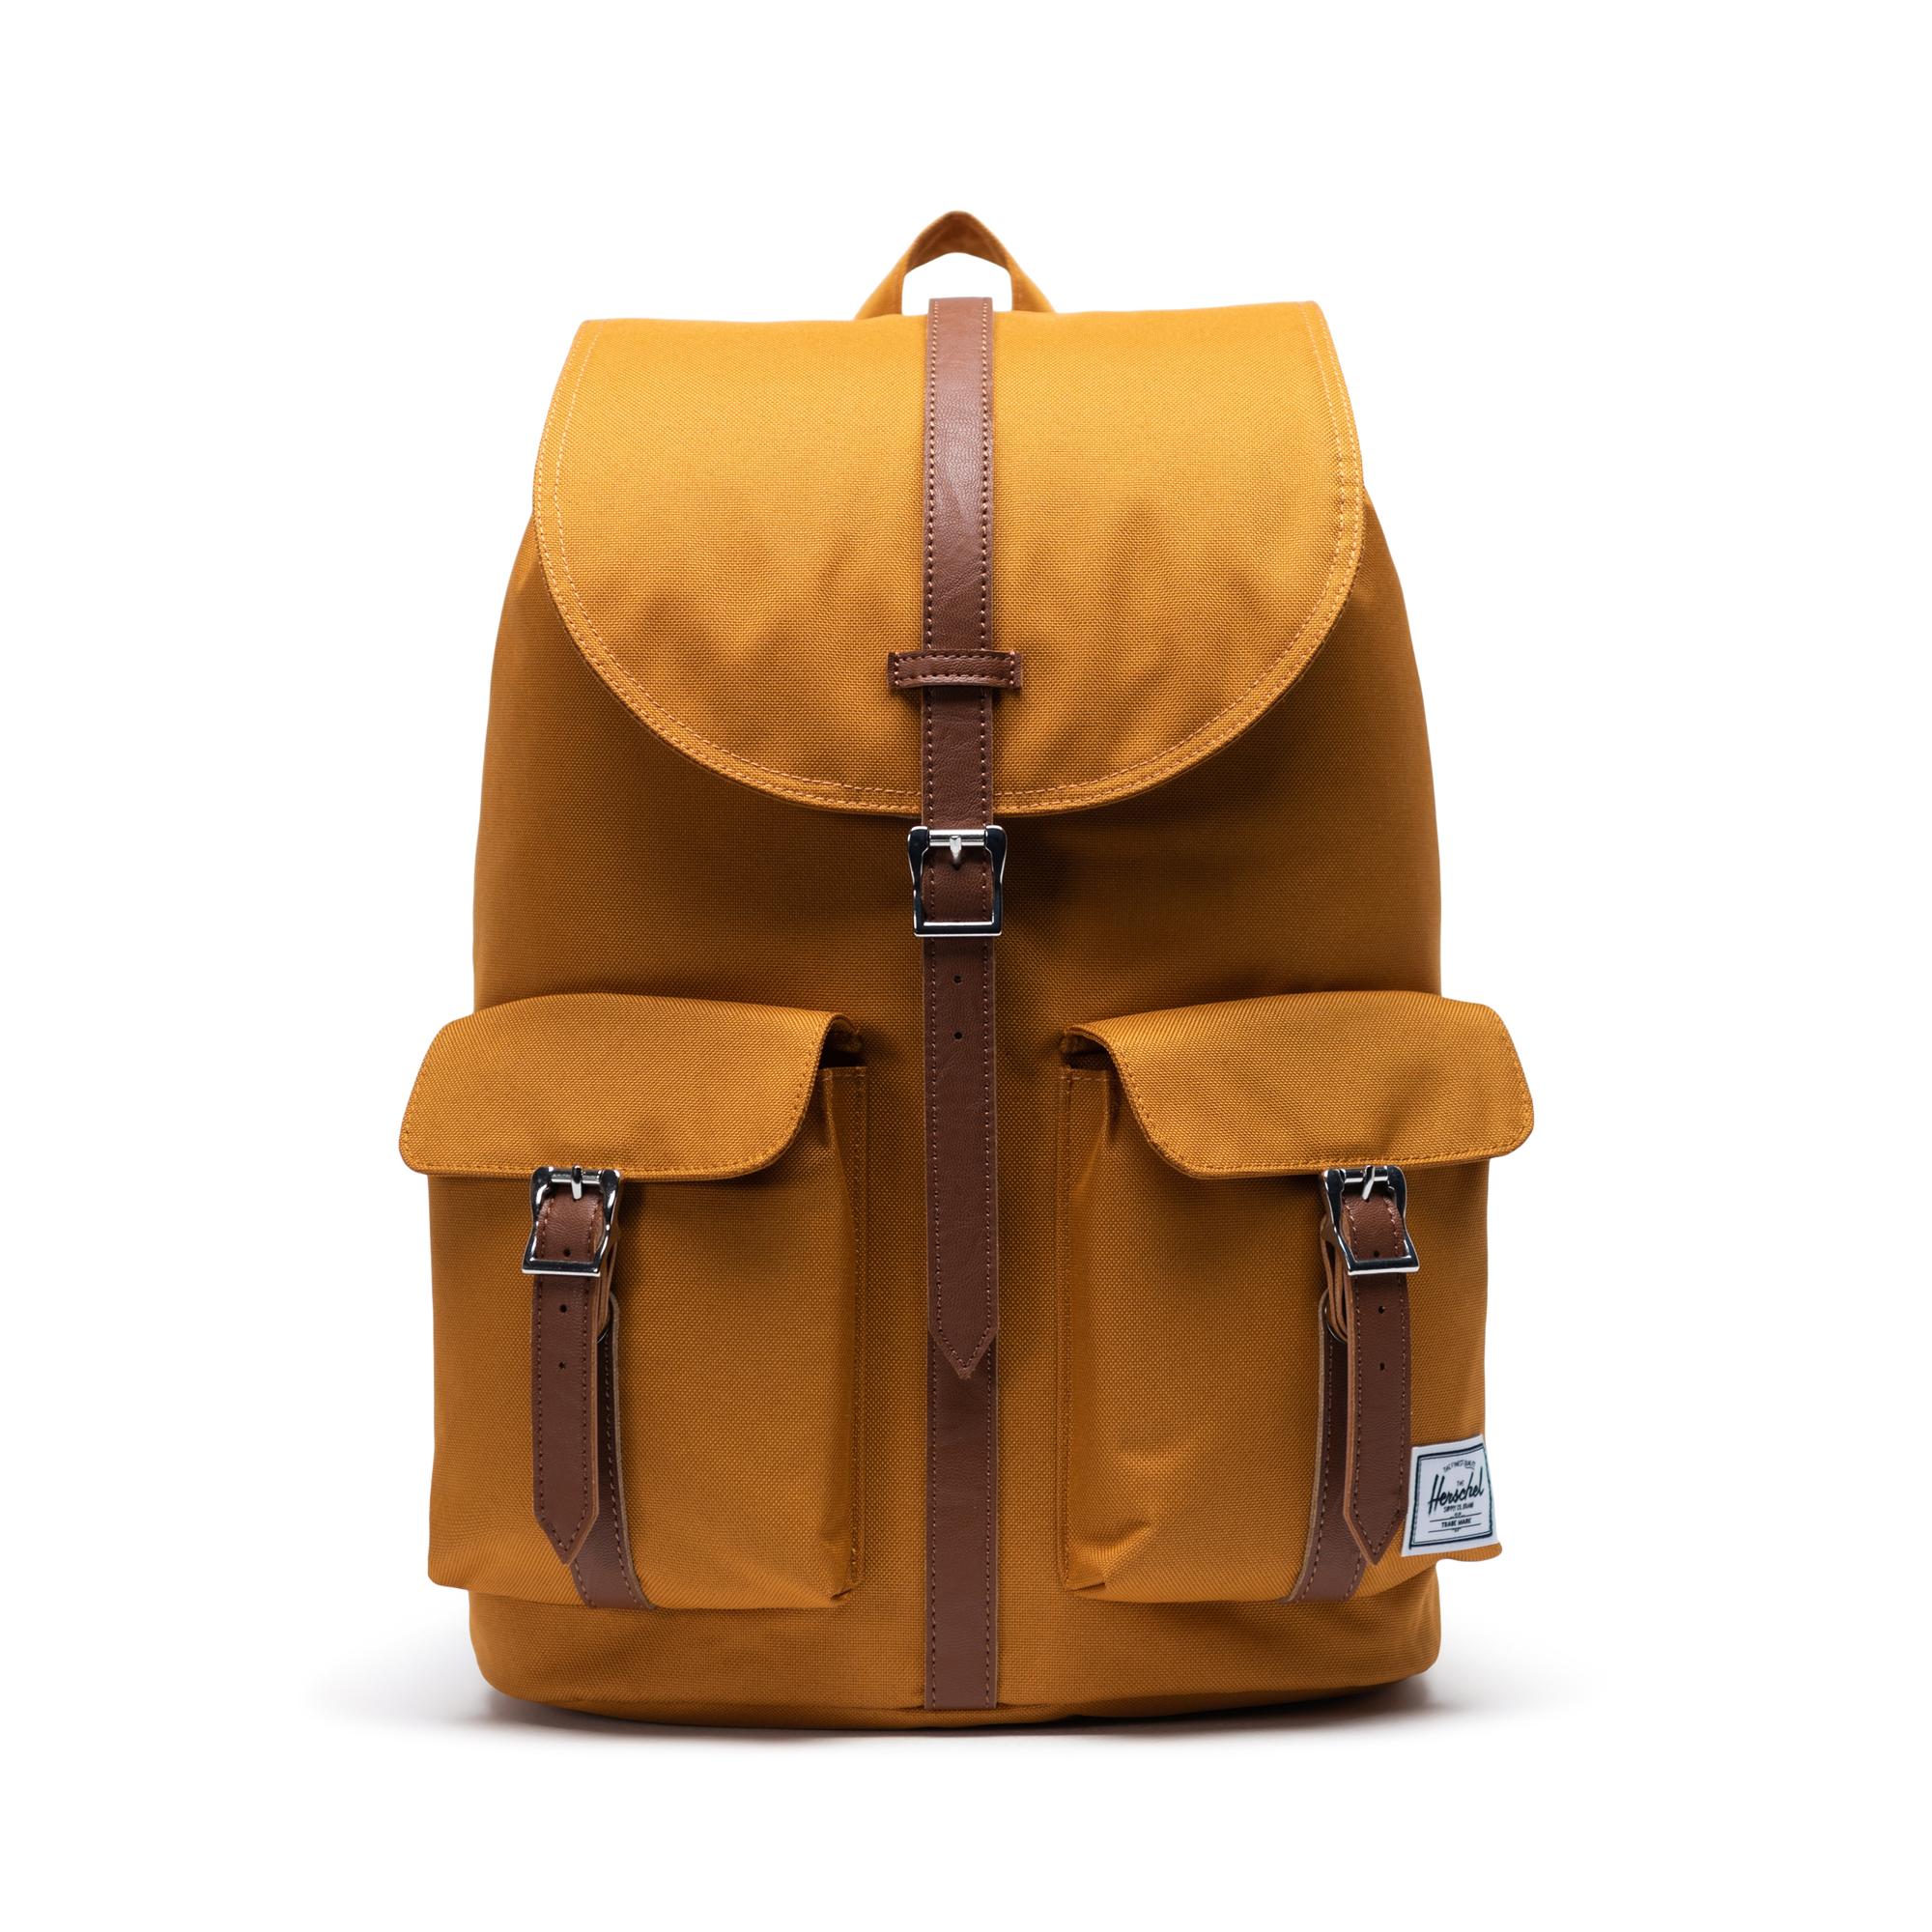 Dawson Backpack Light | Herschel Supply Company